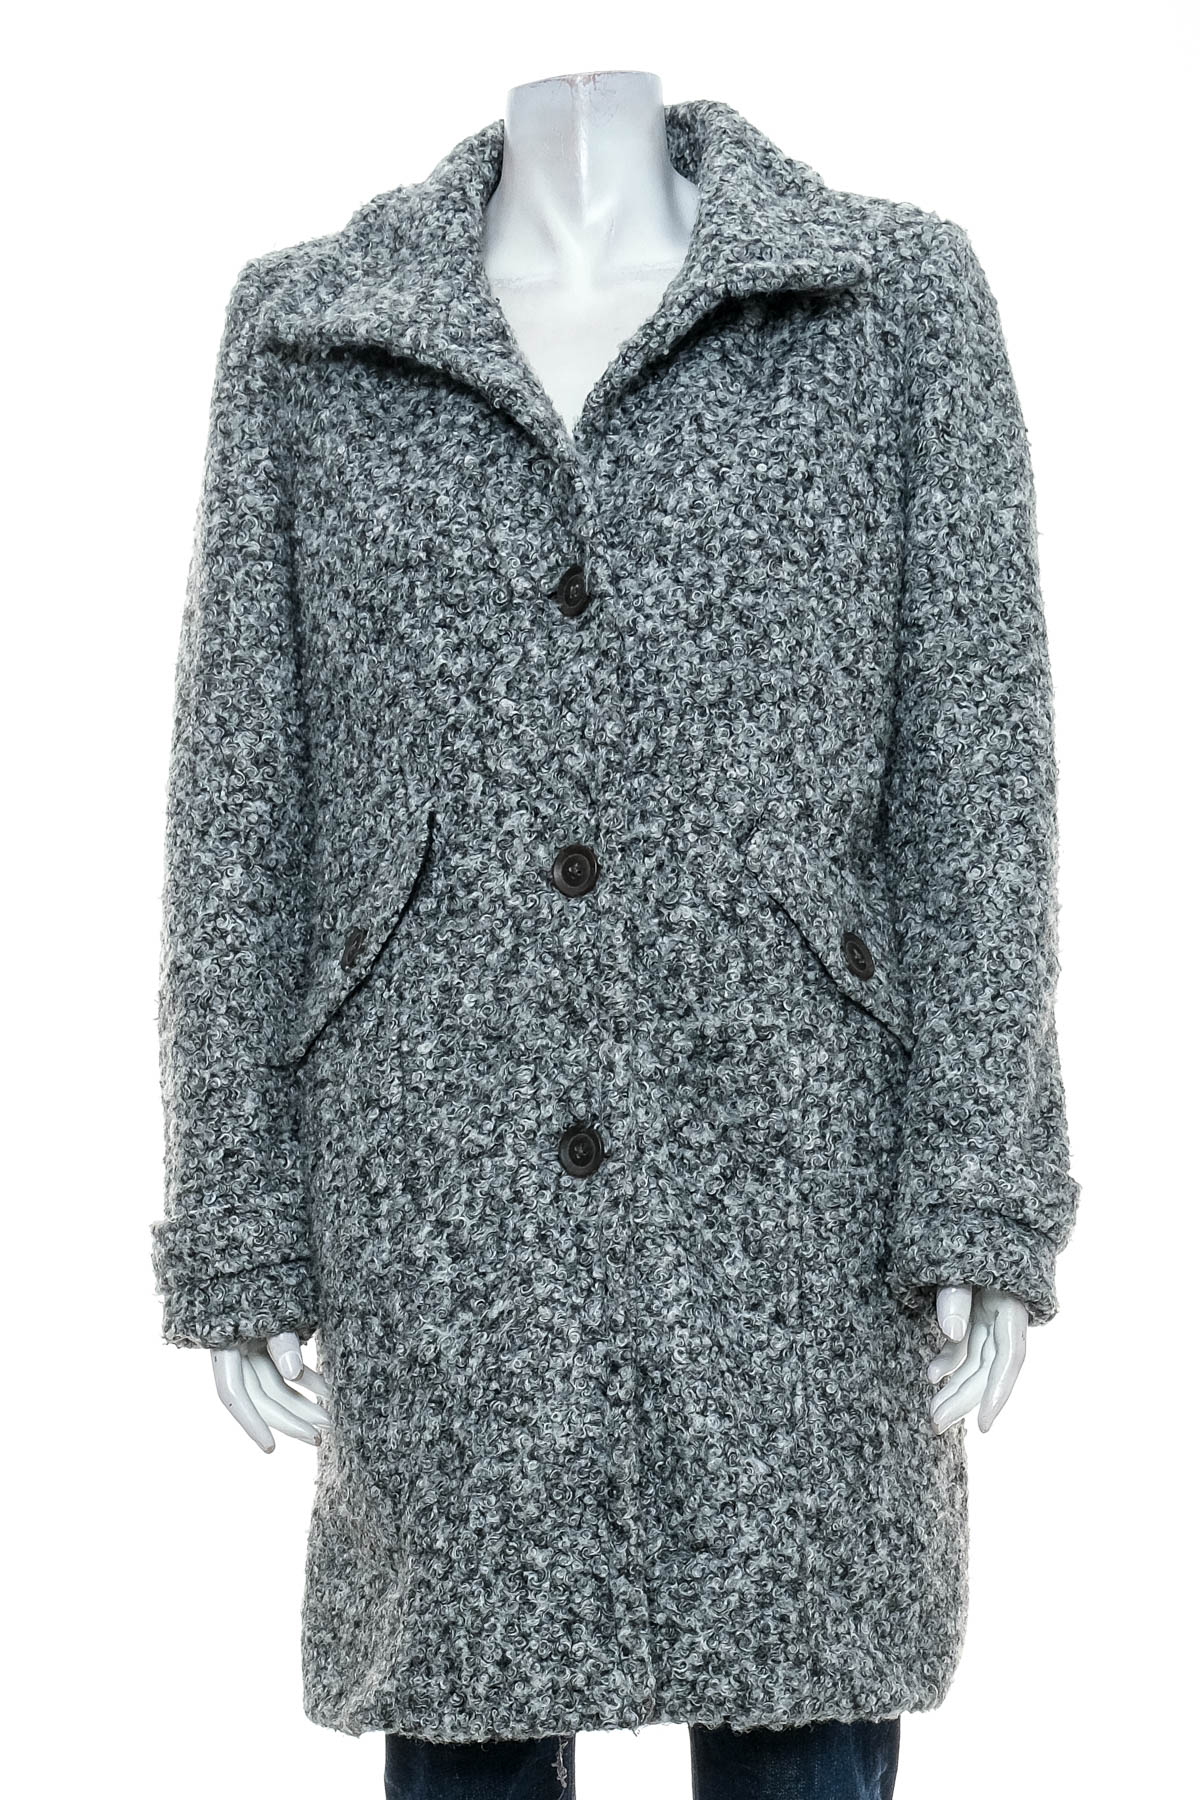 Women's coat - Jean Pascale - 0